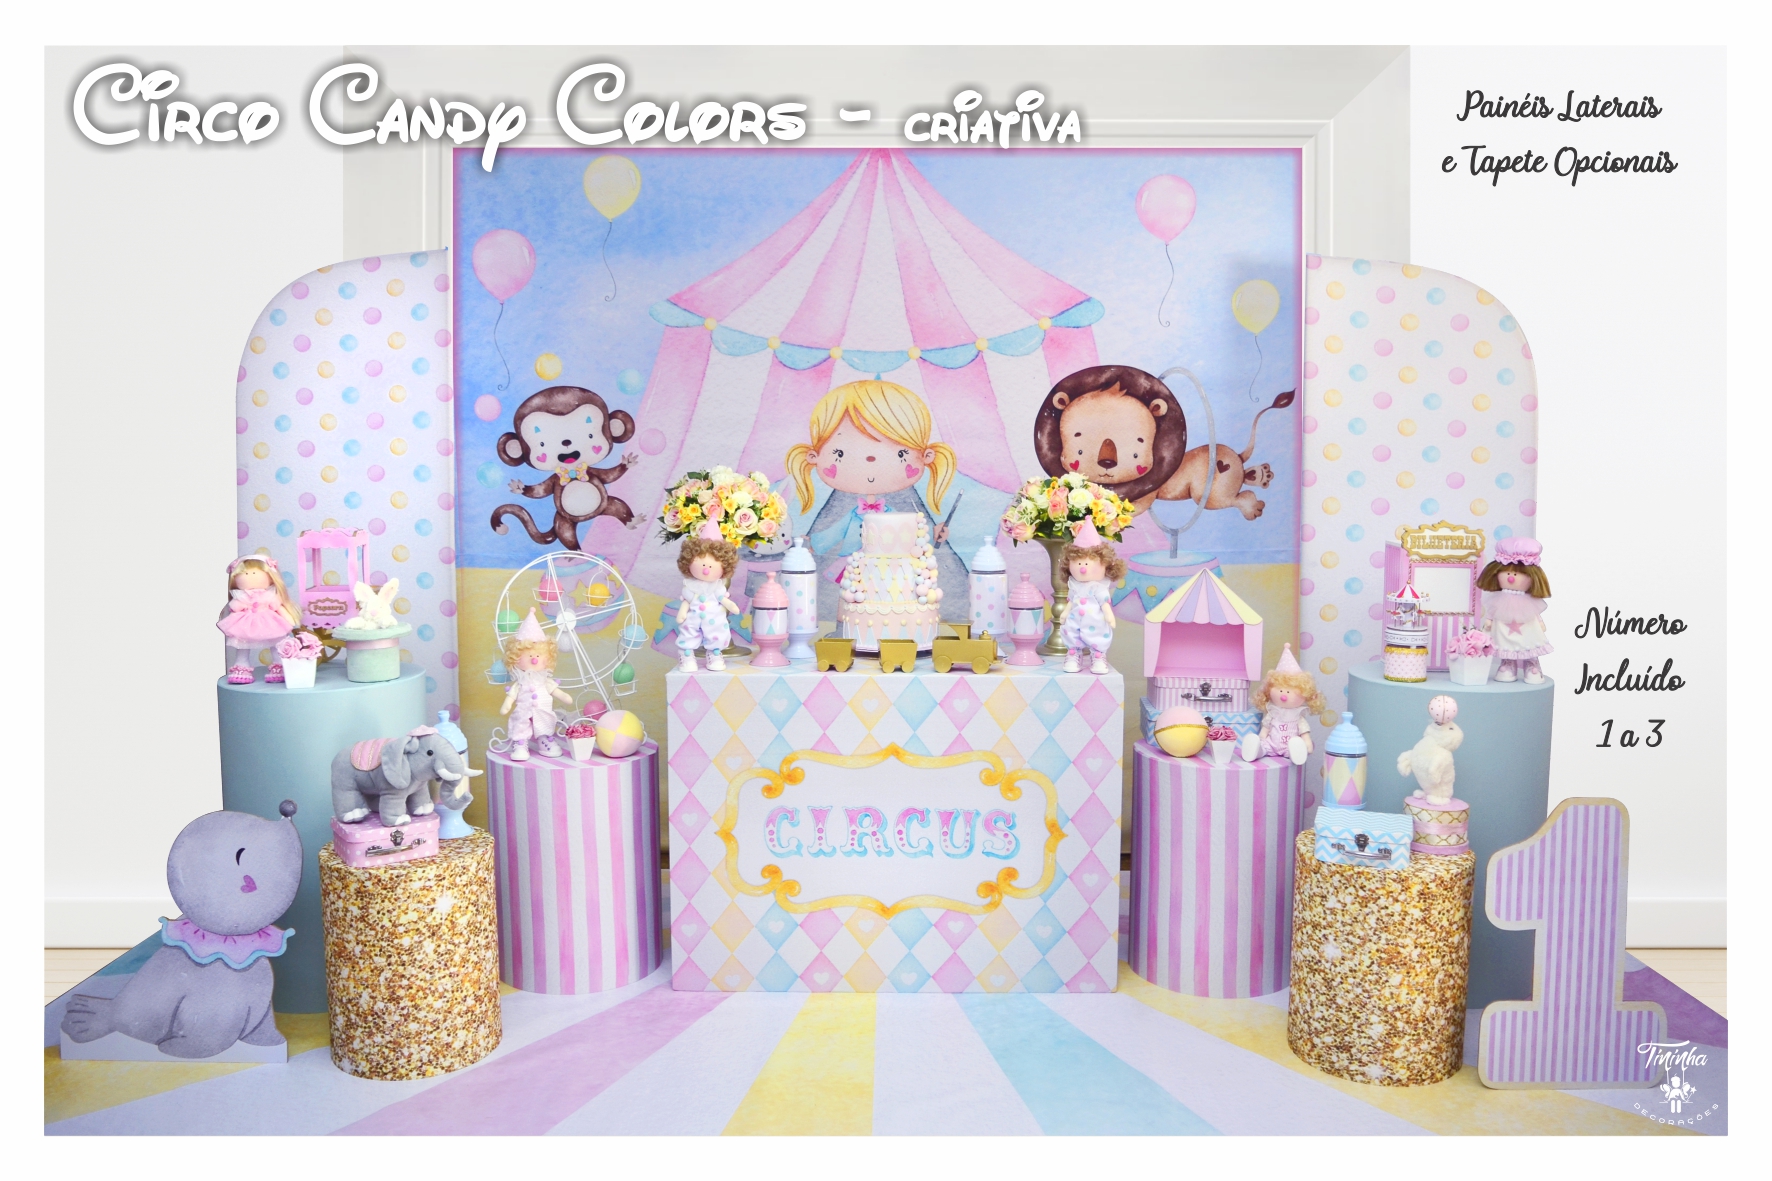 Circo Candy Colors -criativa